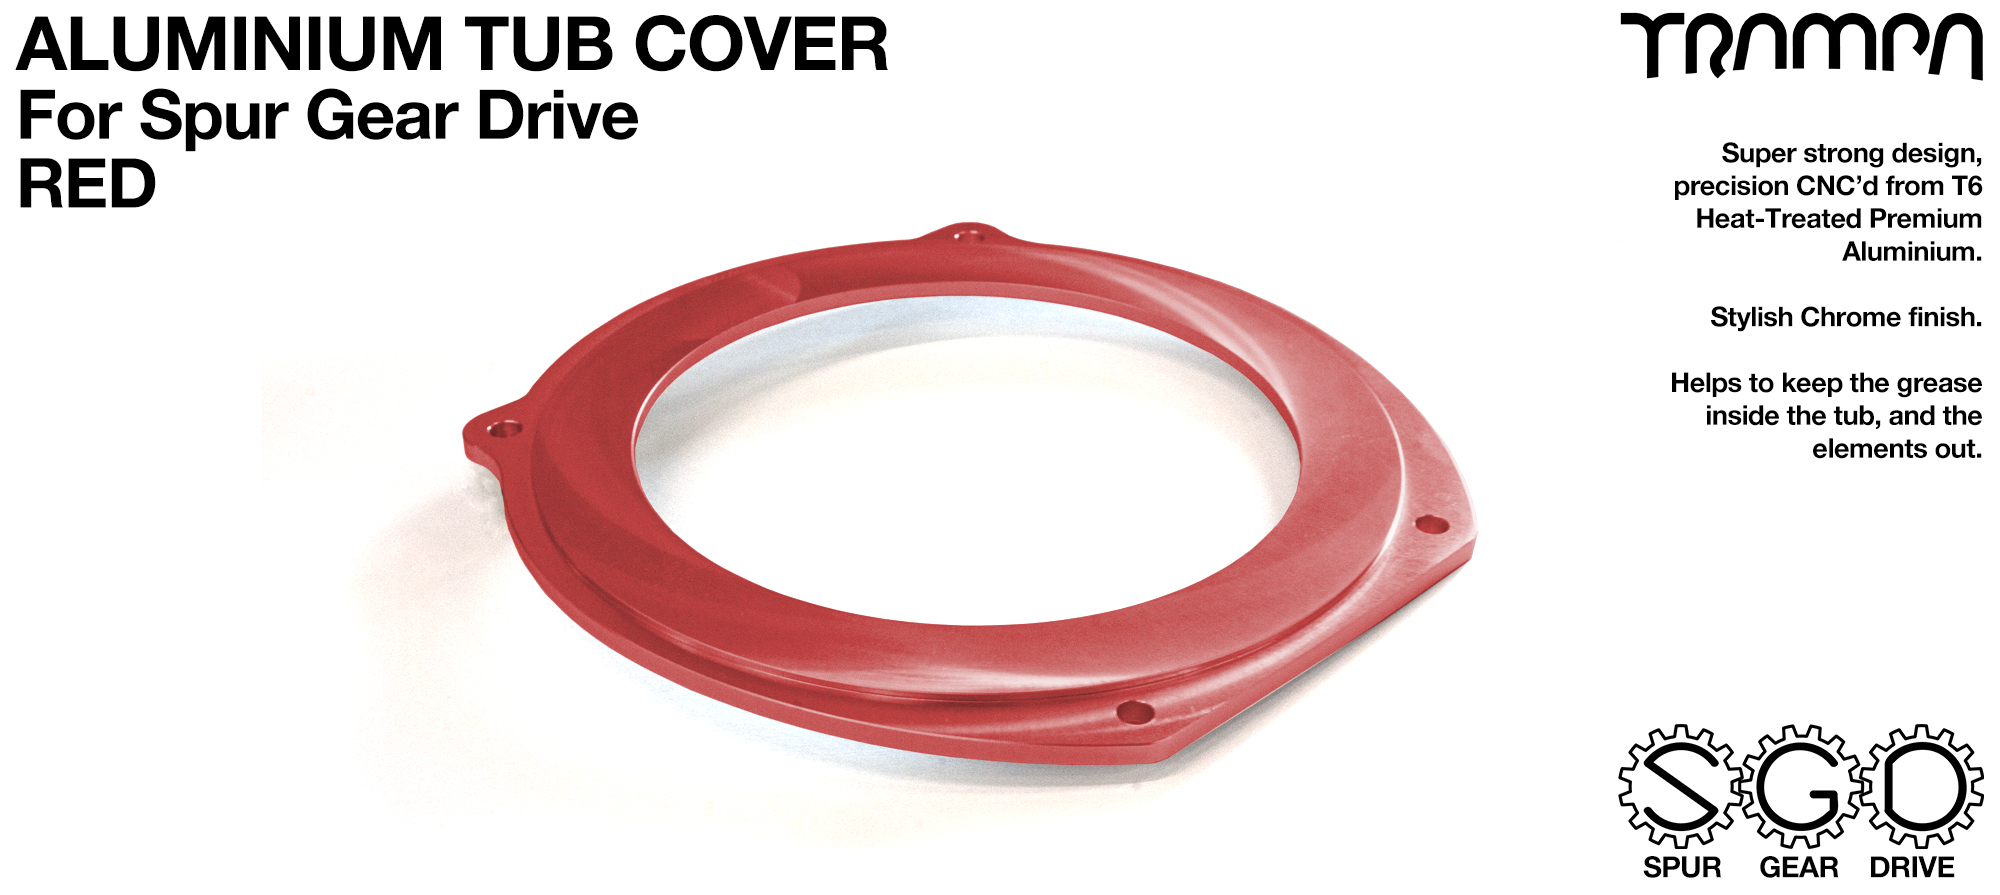 TRAMPA SPUR Gear Drive T6 Aluminium Tub Cover - RED